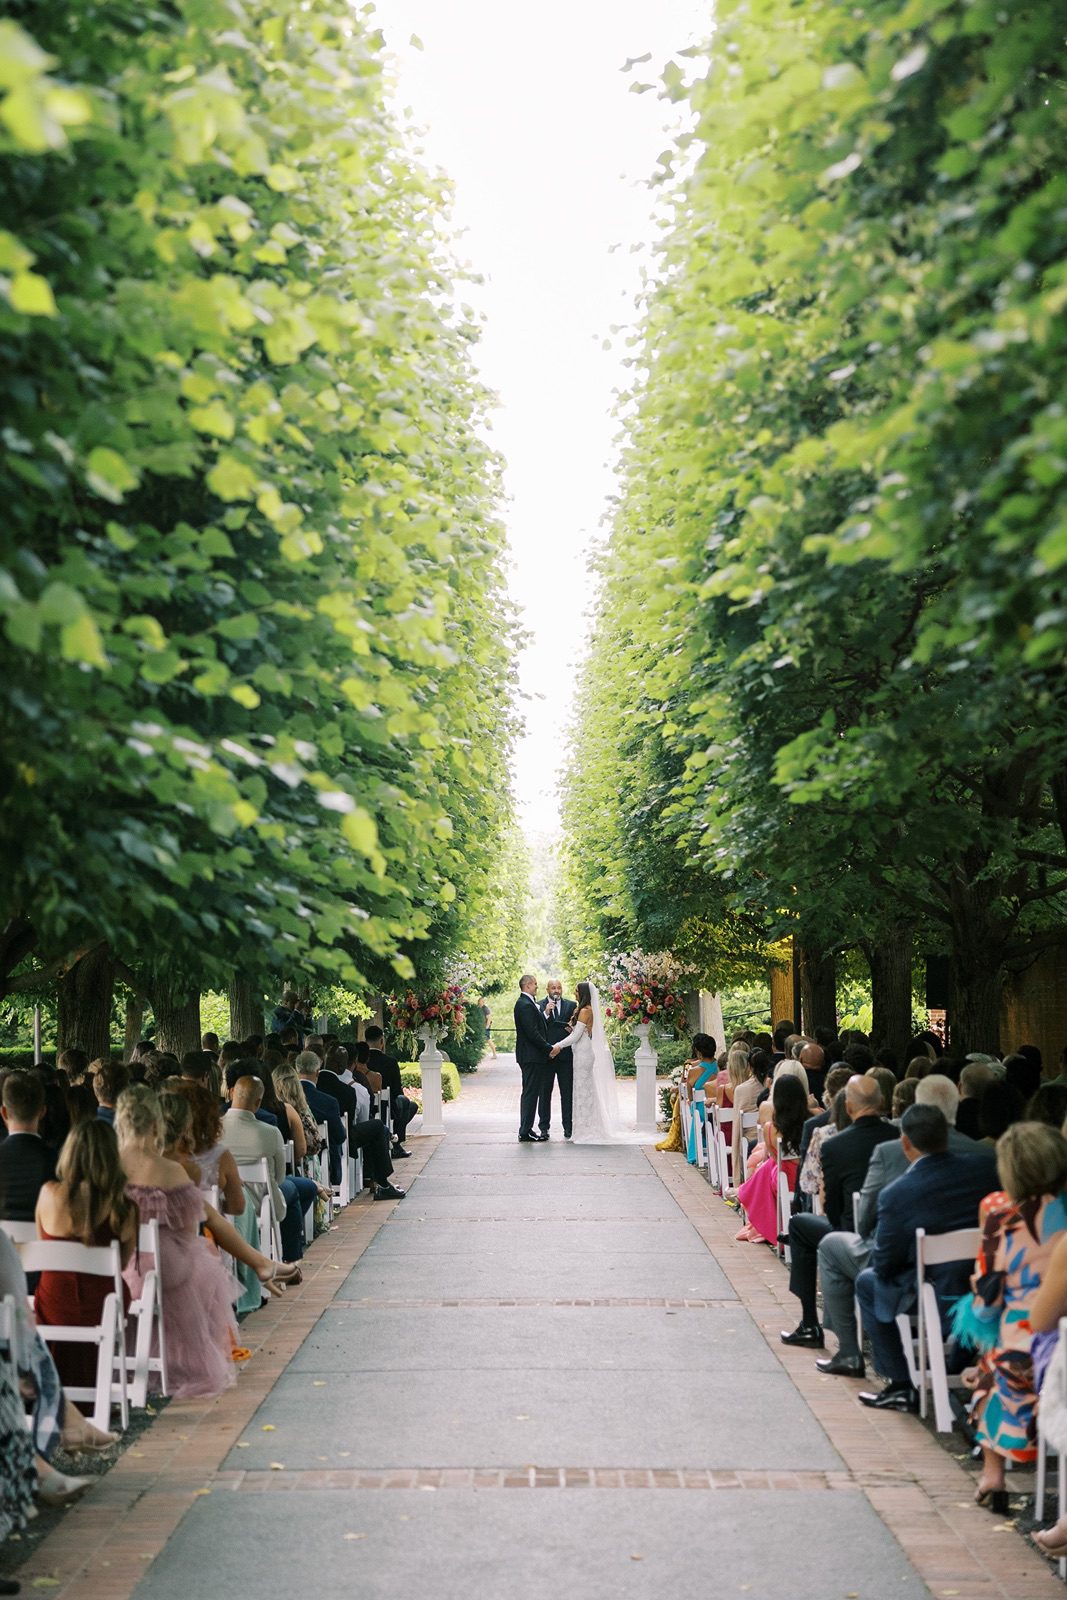 View of the Chicago Botanic Garden wedding ceremony aisle